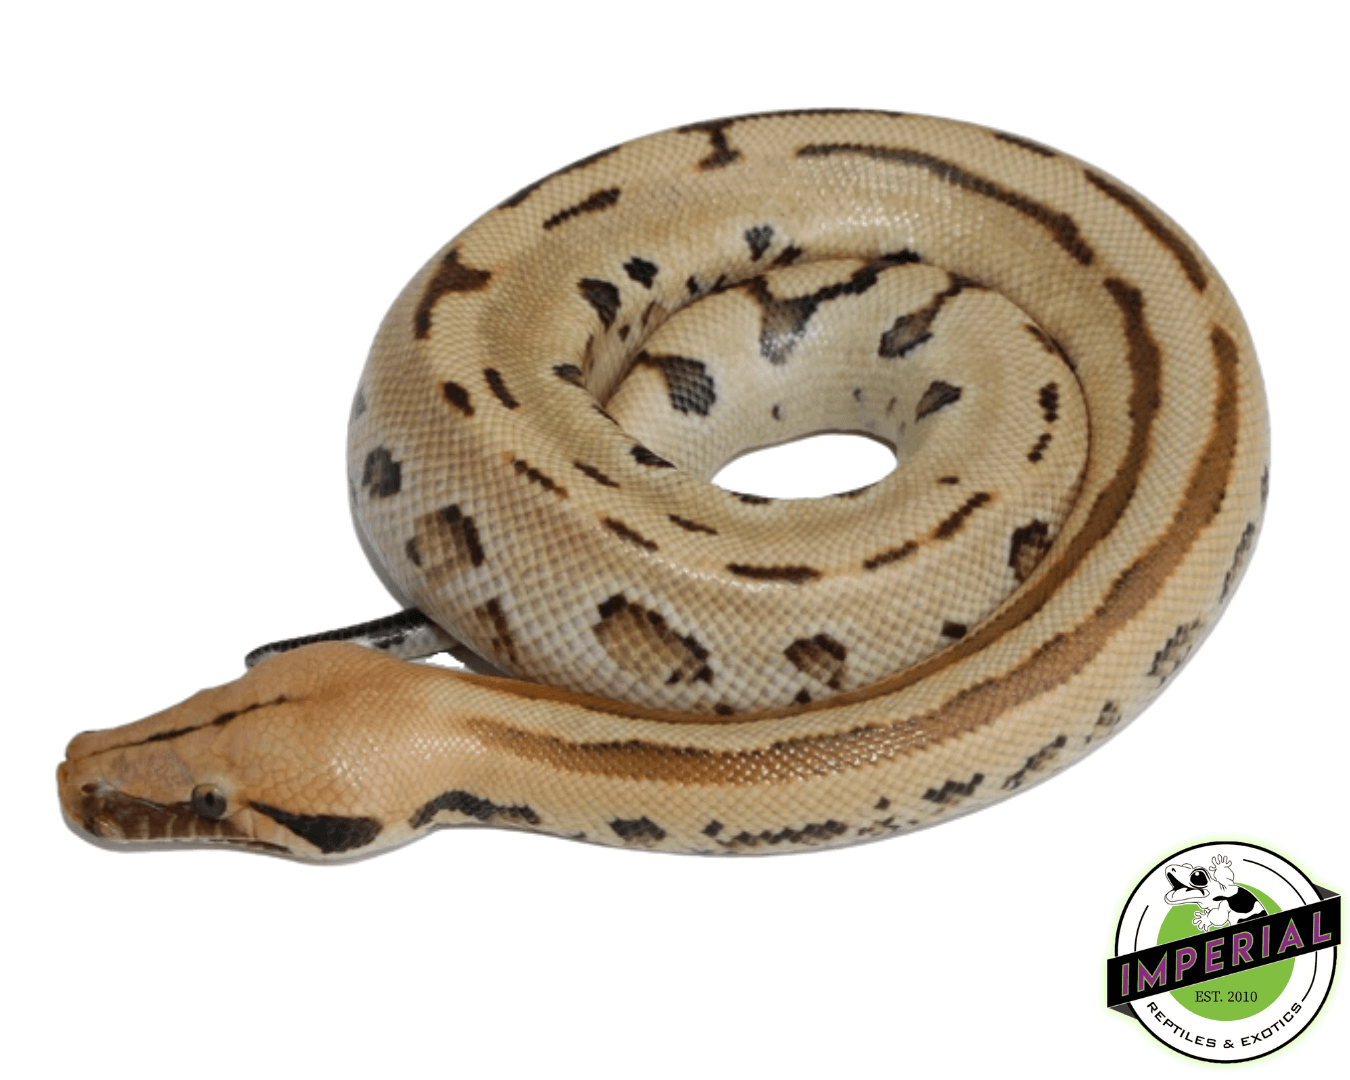 ocelot borneo short tail python for sale, buy reptiles online